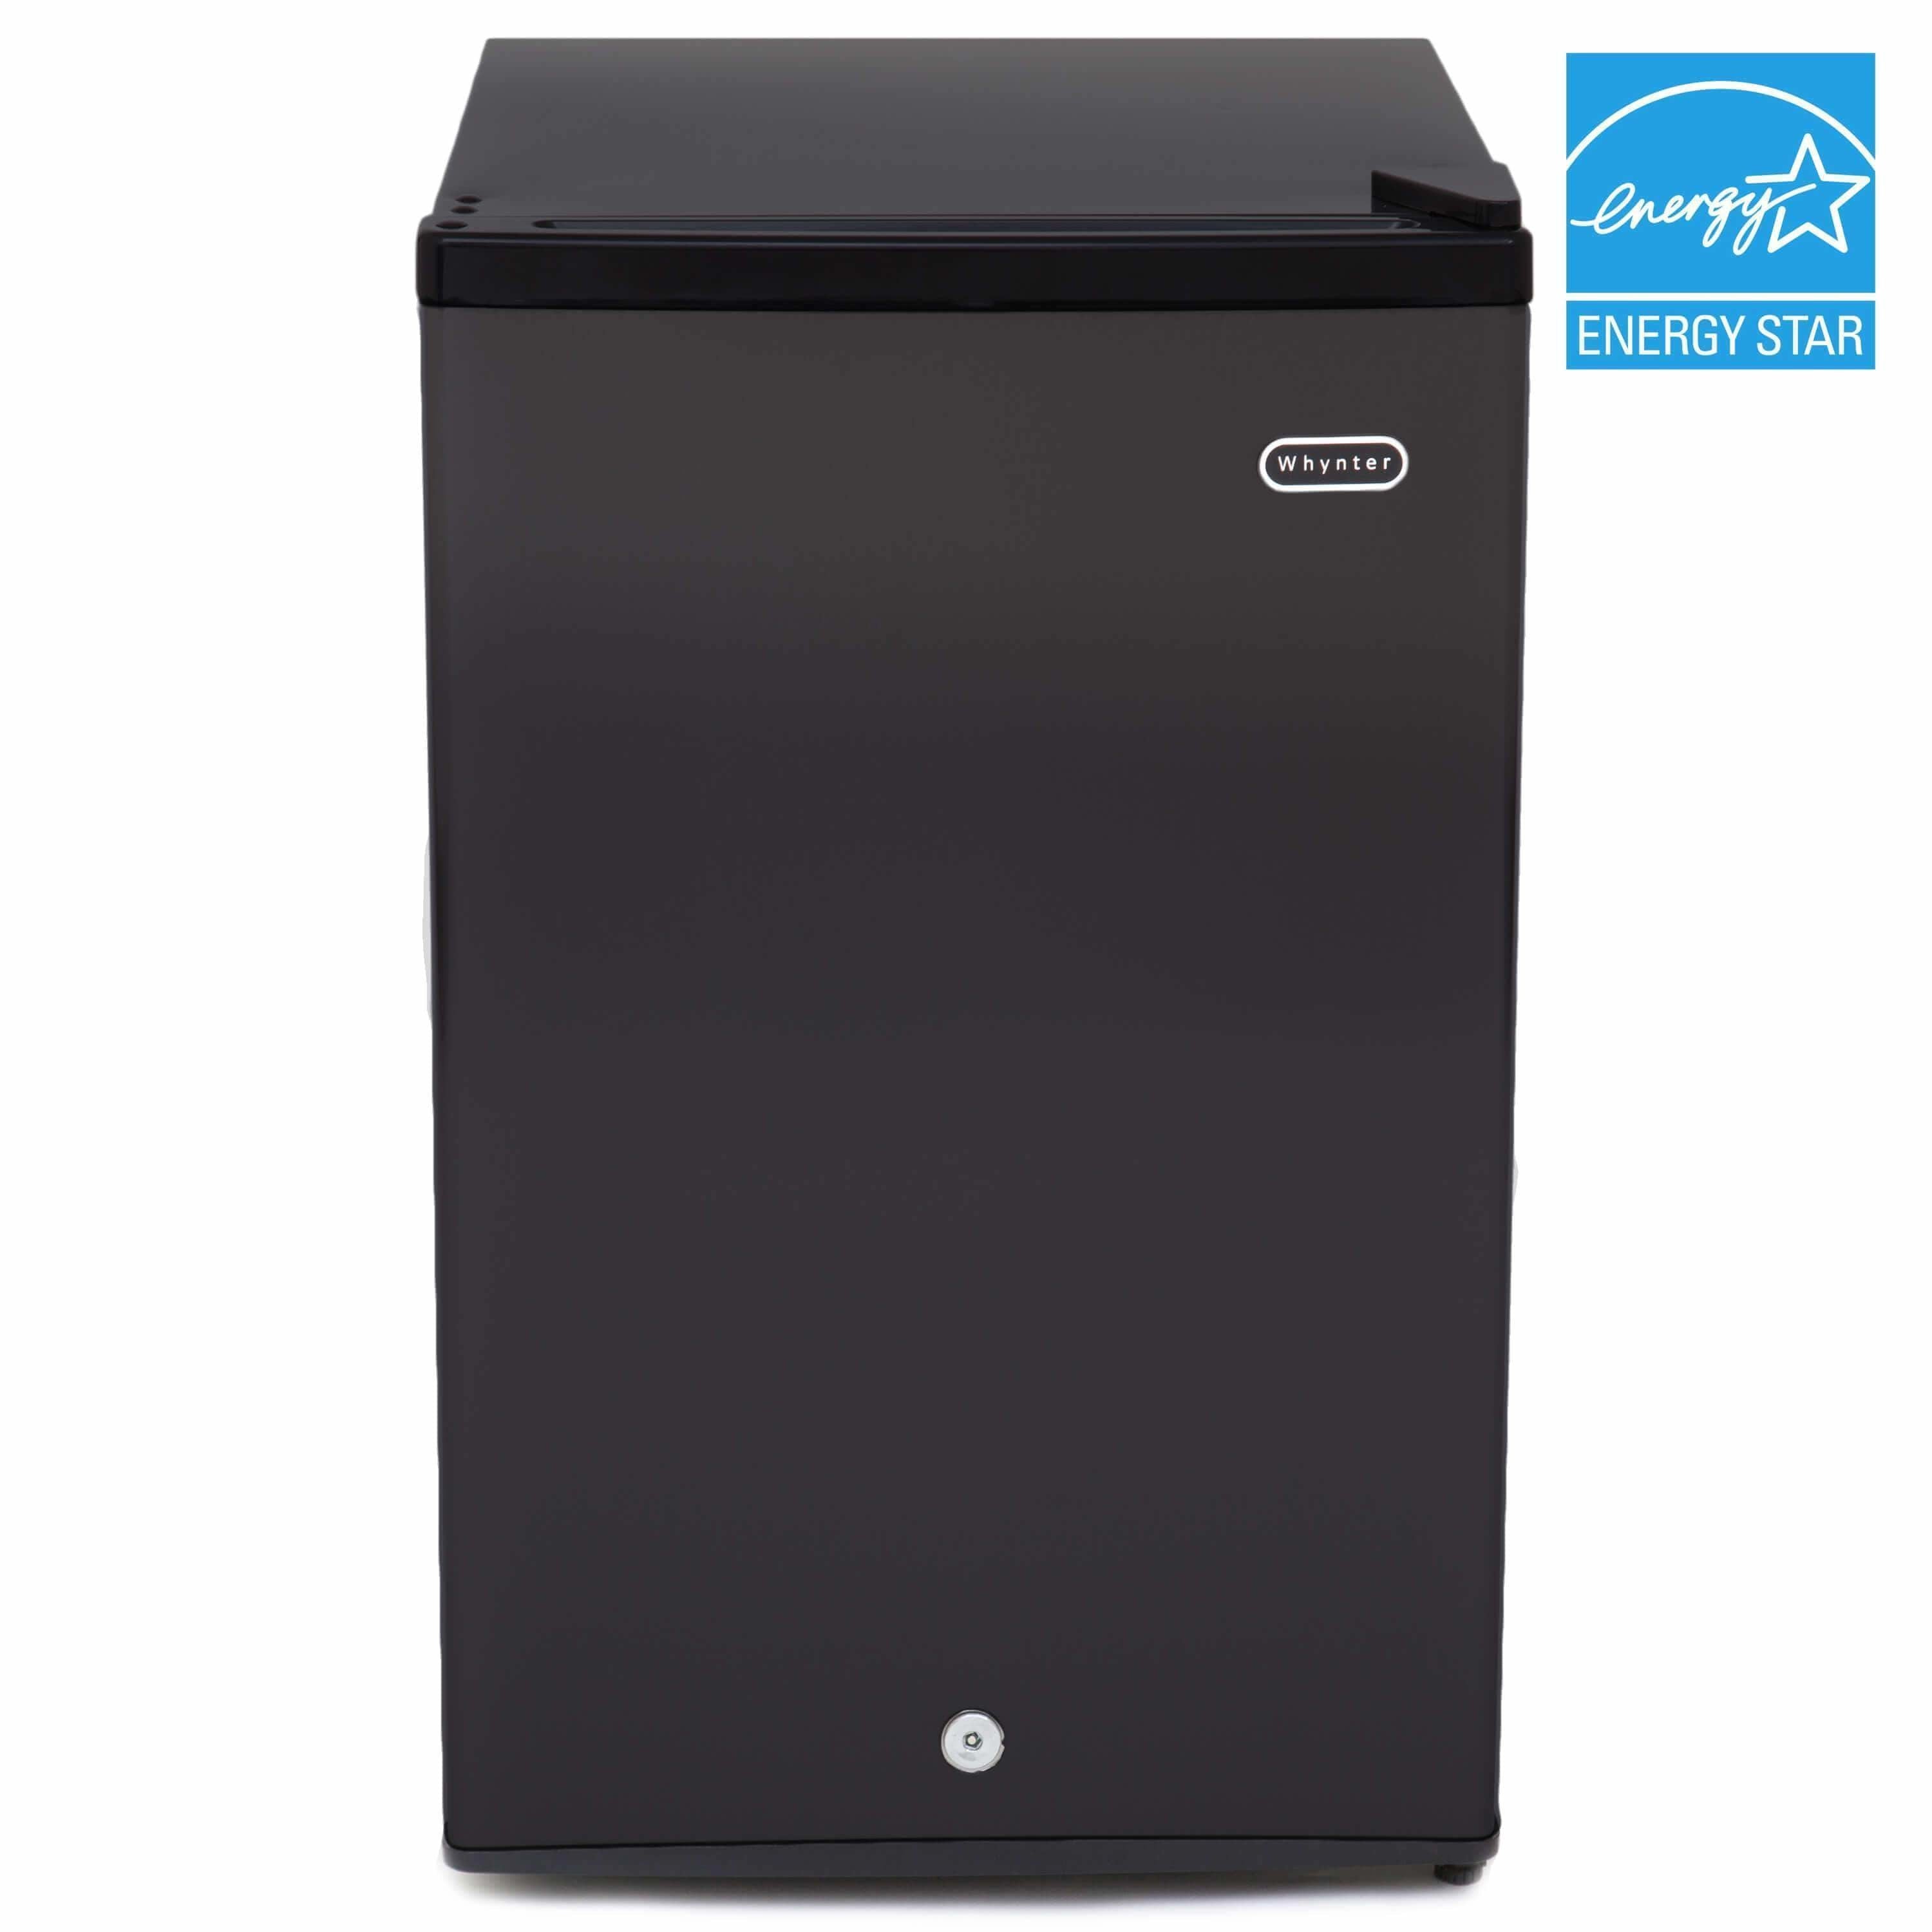 Whynter 3.0 cu. ft. Energy Star Upright Freezer with Lock - Black  CUF-301BK Freezers CUF-301BK Luxury Appliances Direct